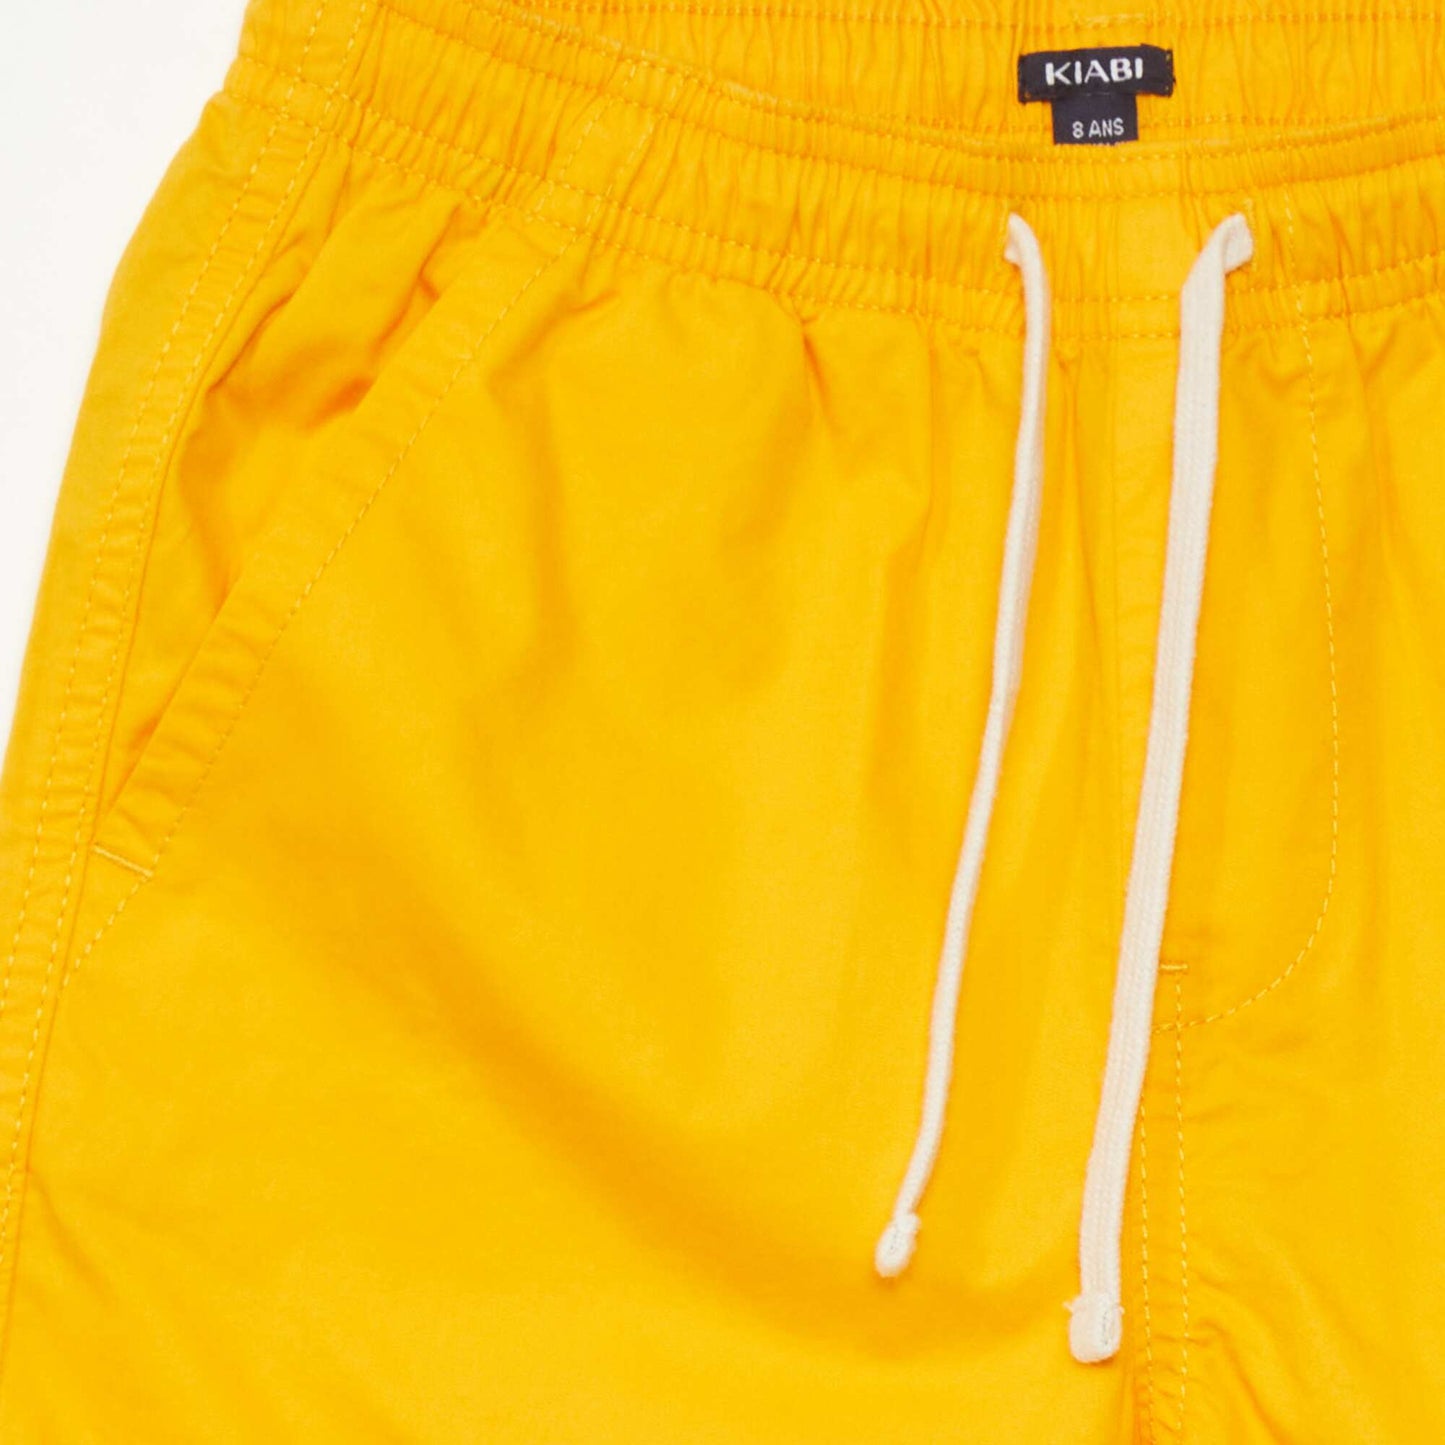 Straight-cut block colour Bermuda shorts YELLOW